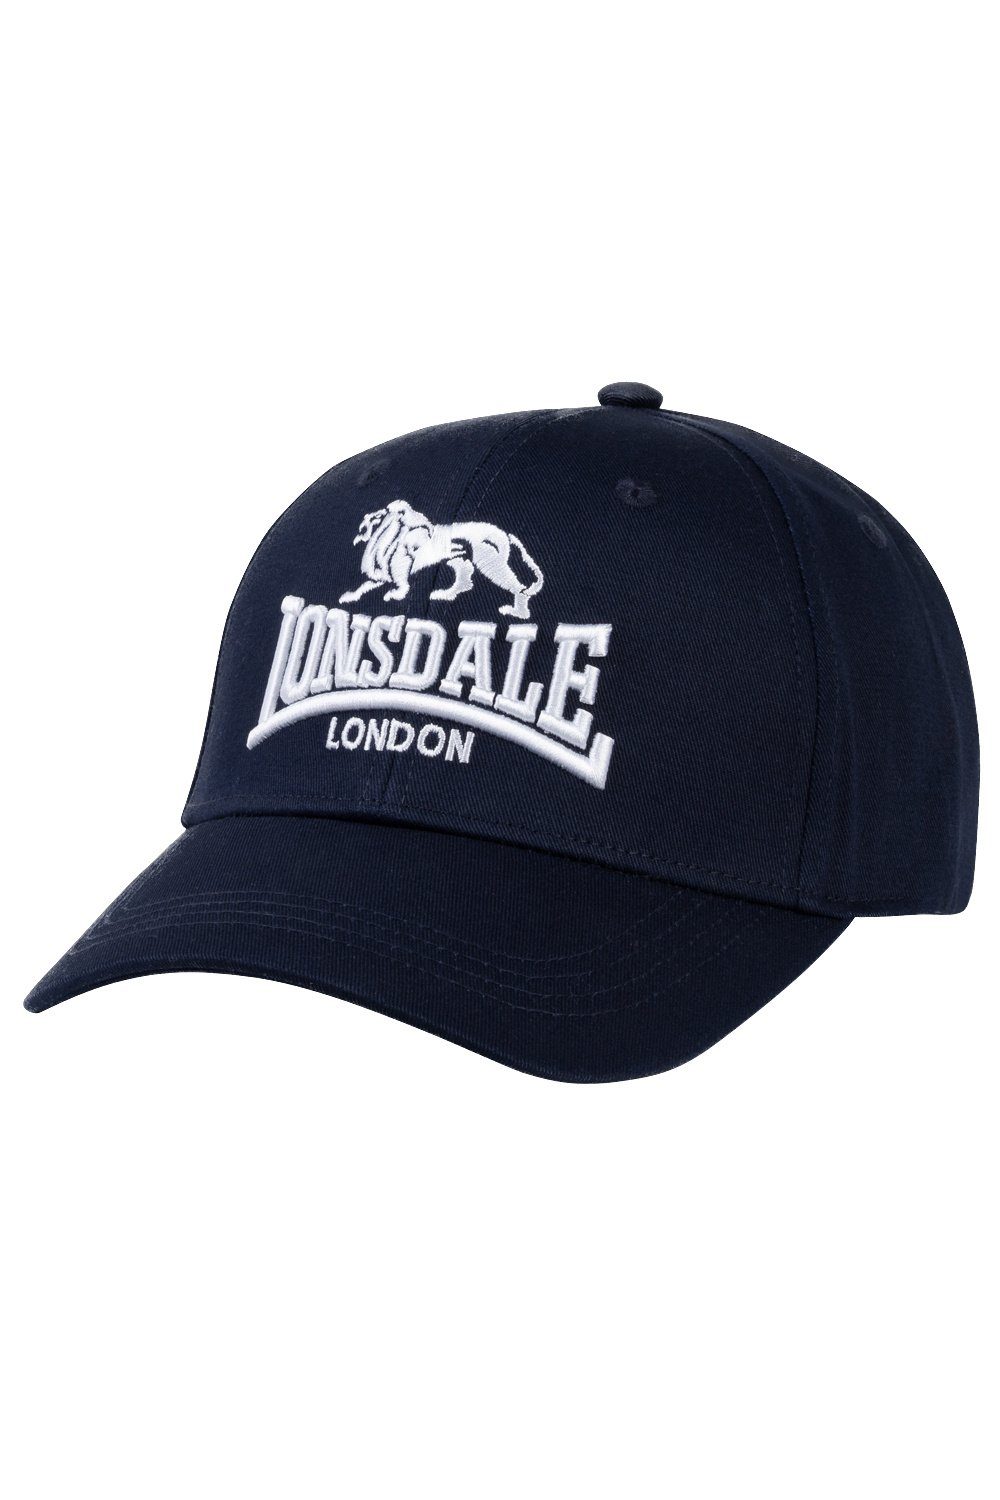 Lonsdale Baseball Unisex Lonsdale SALFORD navy/white Cap Cap